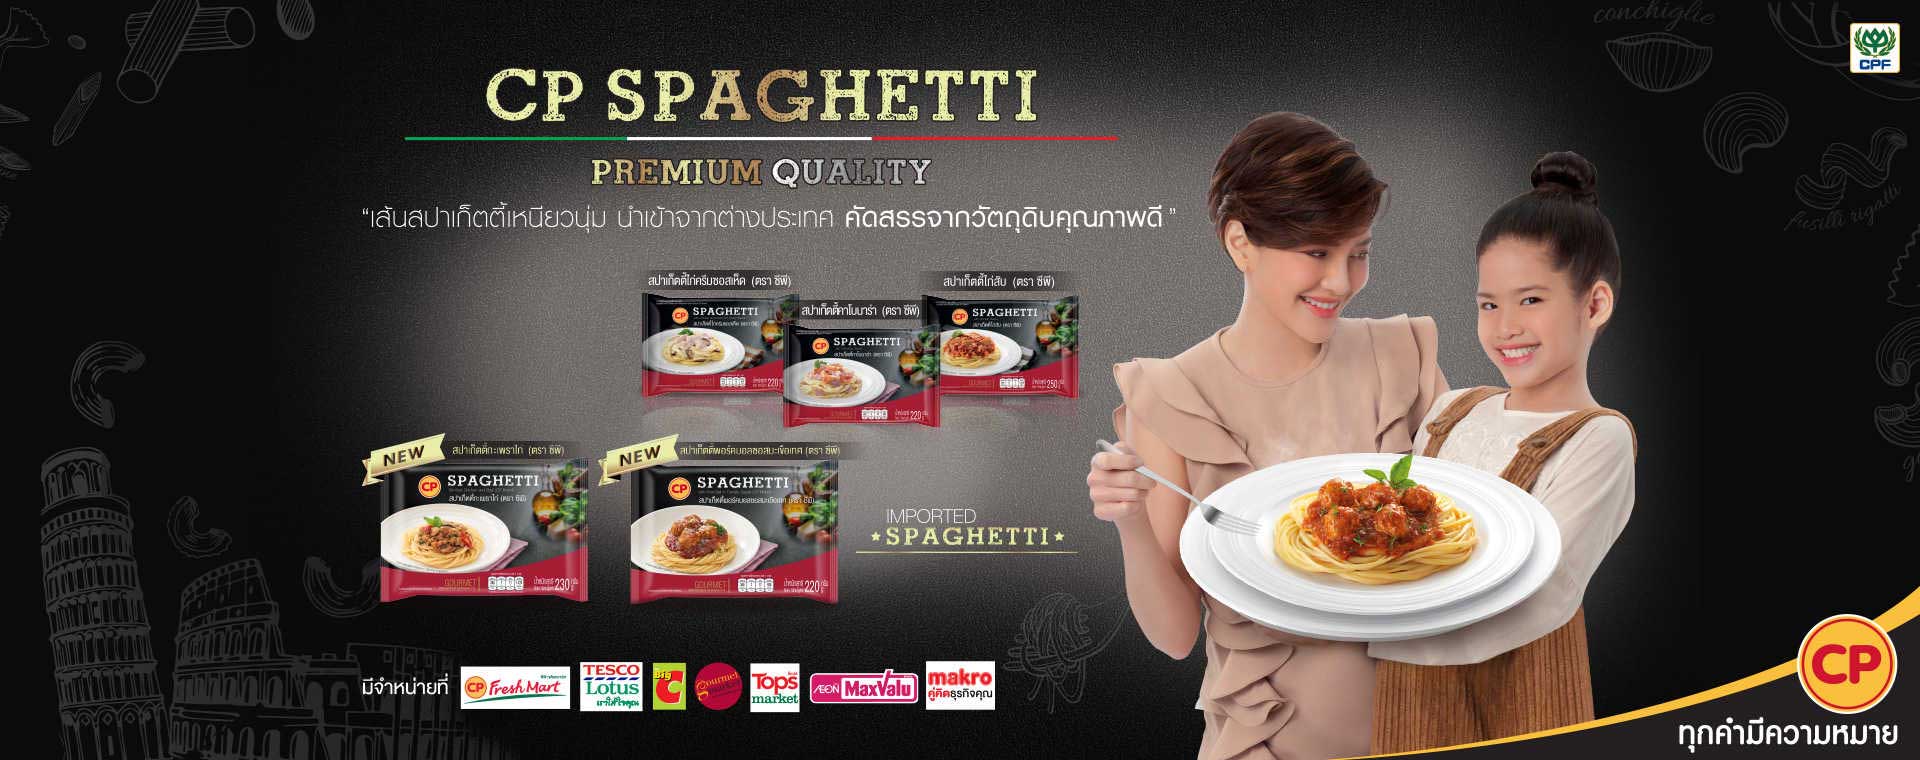 CP Spaghetti Premium Quality เส้นสปาเก็ตตี้เหนียวนุ่ม นำเข้าจากต่างประเทศ คัดสรรจากวัตถุดิบคุณภาพดี